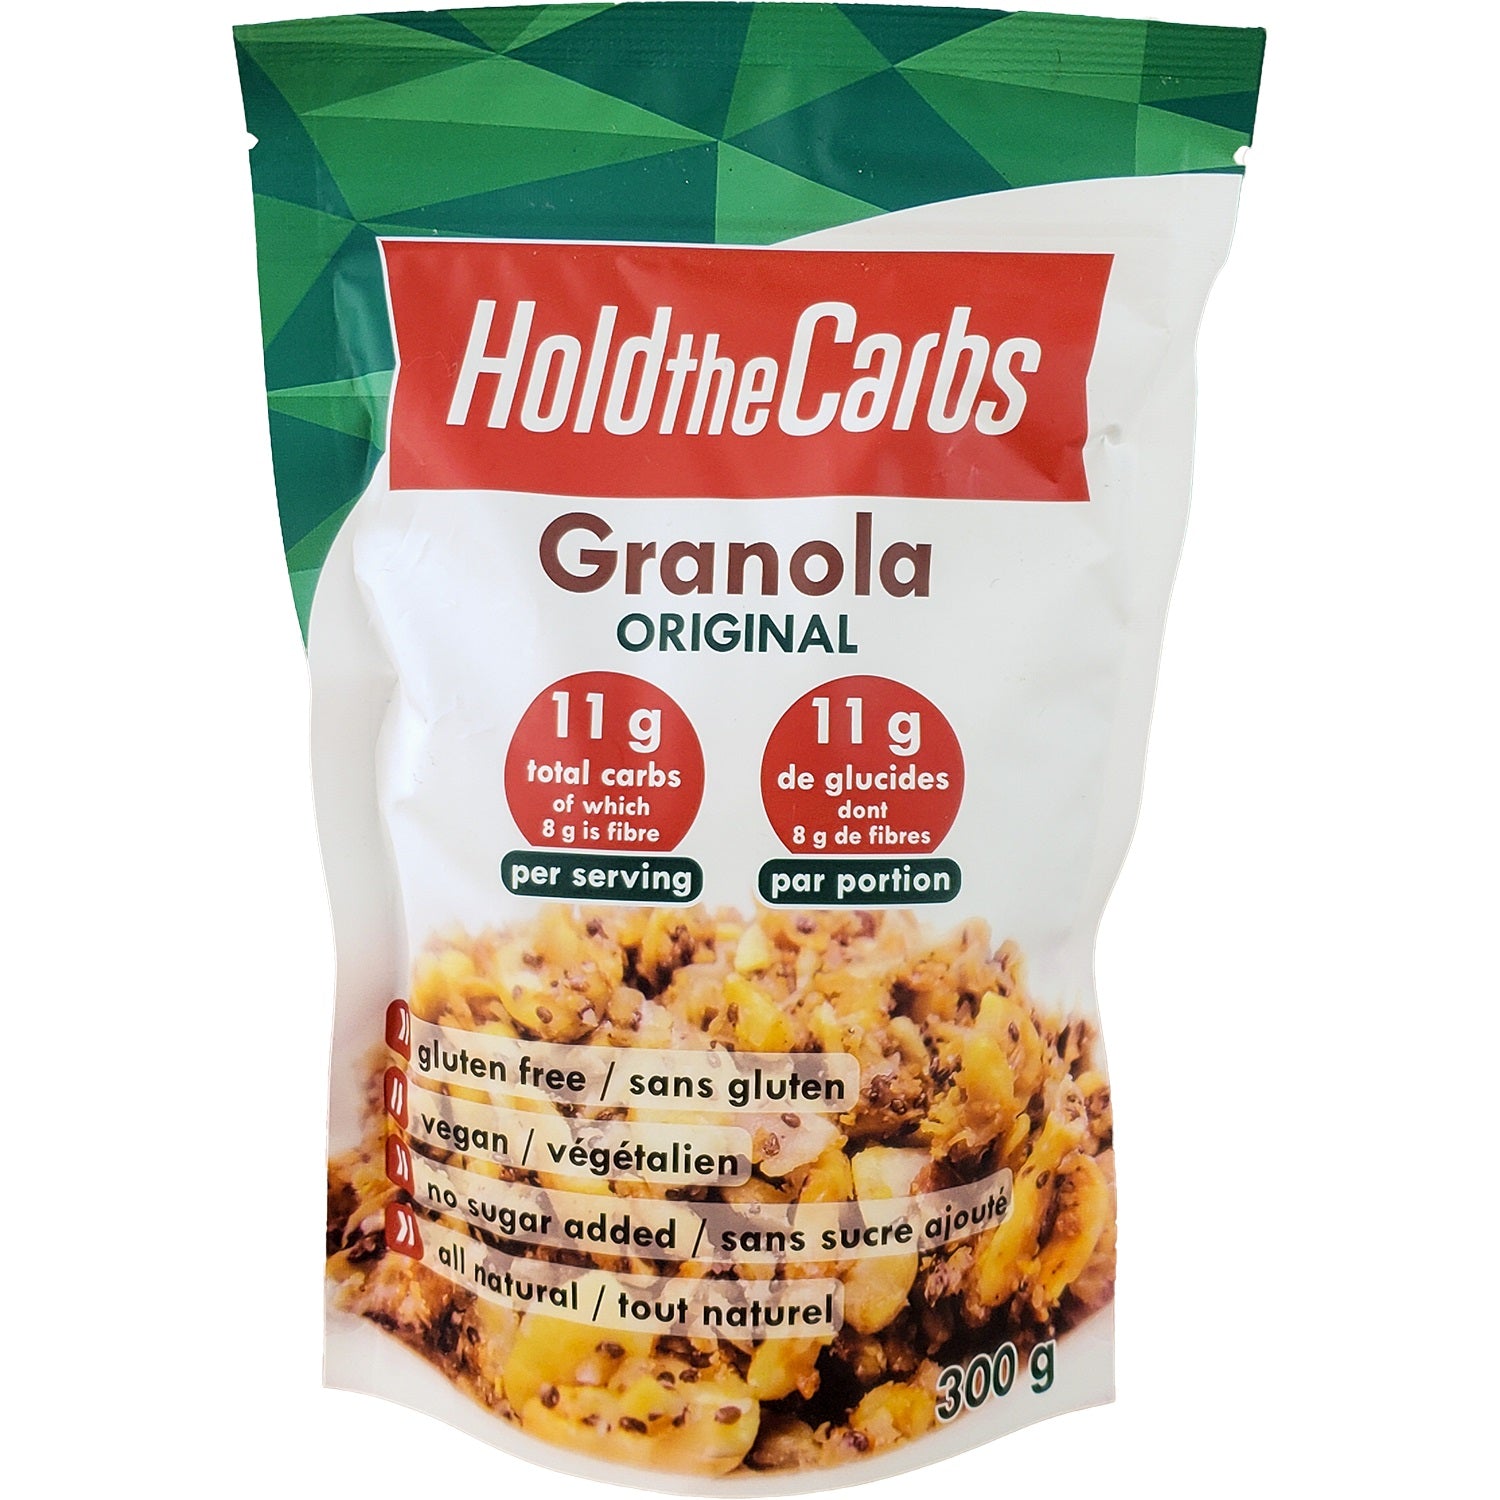 HoldTheCarbs Keto-Friendly Granolas